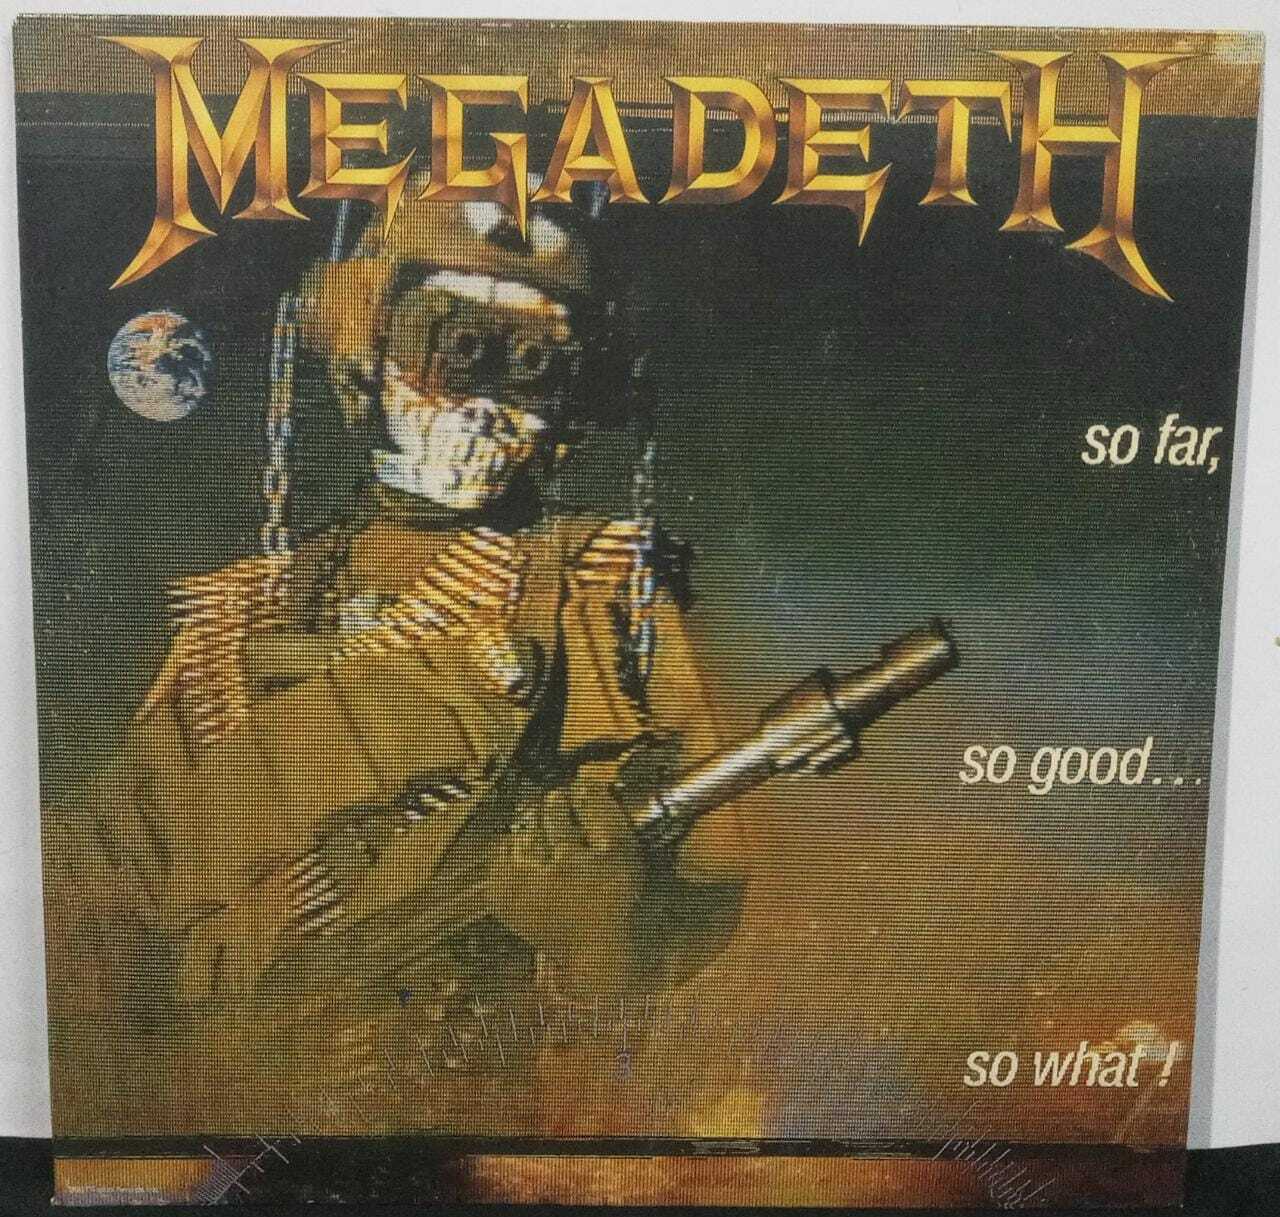 Vinil - Megadeth - So Far so Good so What